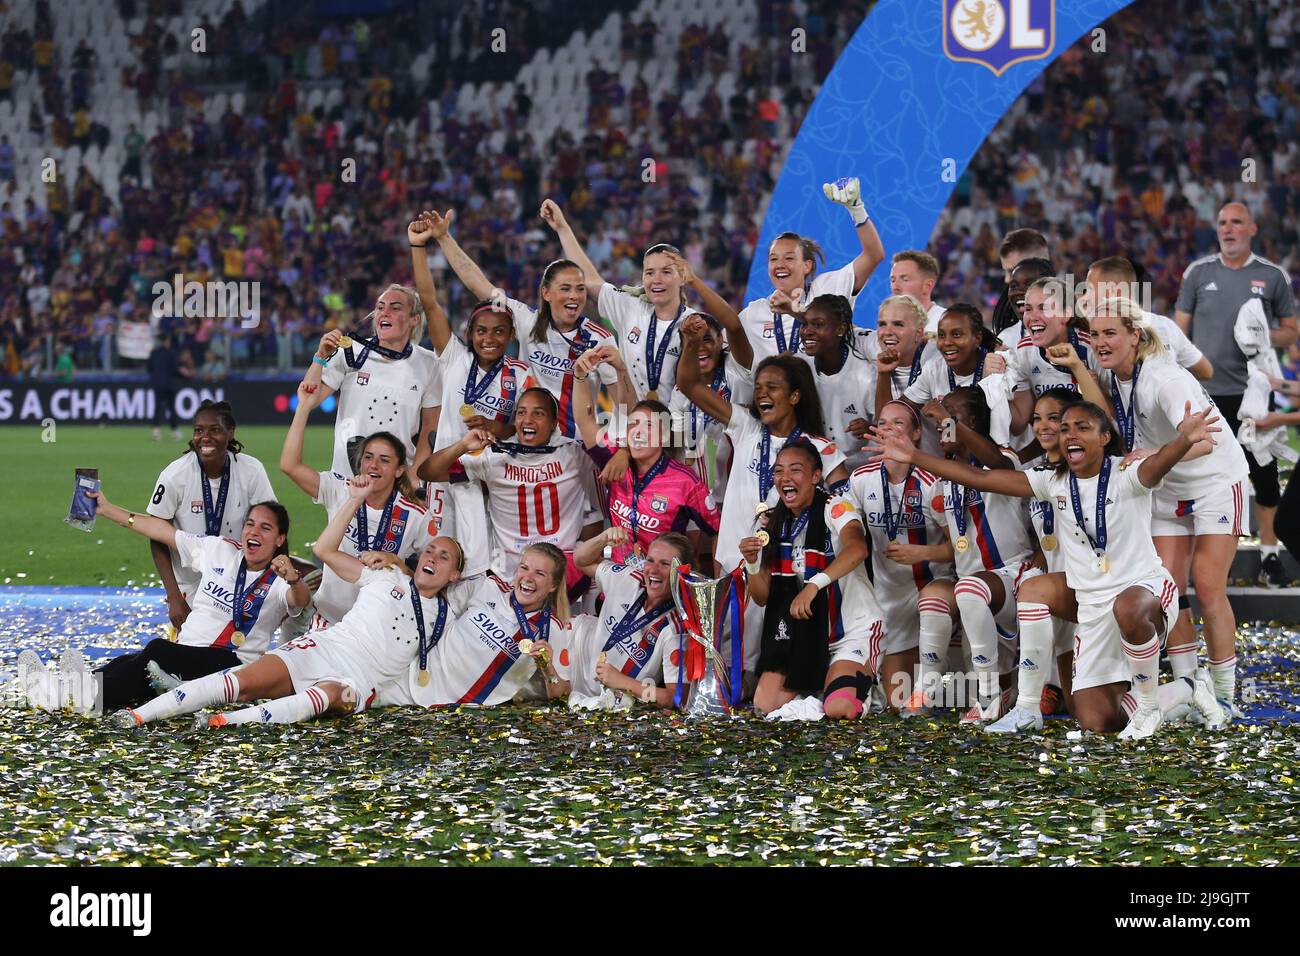 adidas Real Madrid Ballon Champions League 2016 Finale Capitano - Blanc/Gris